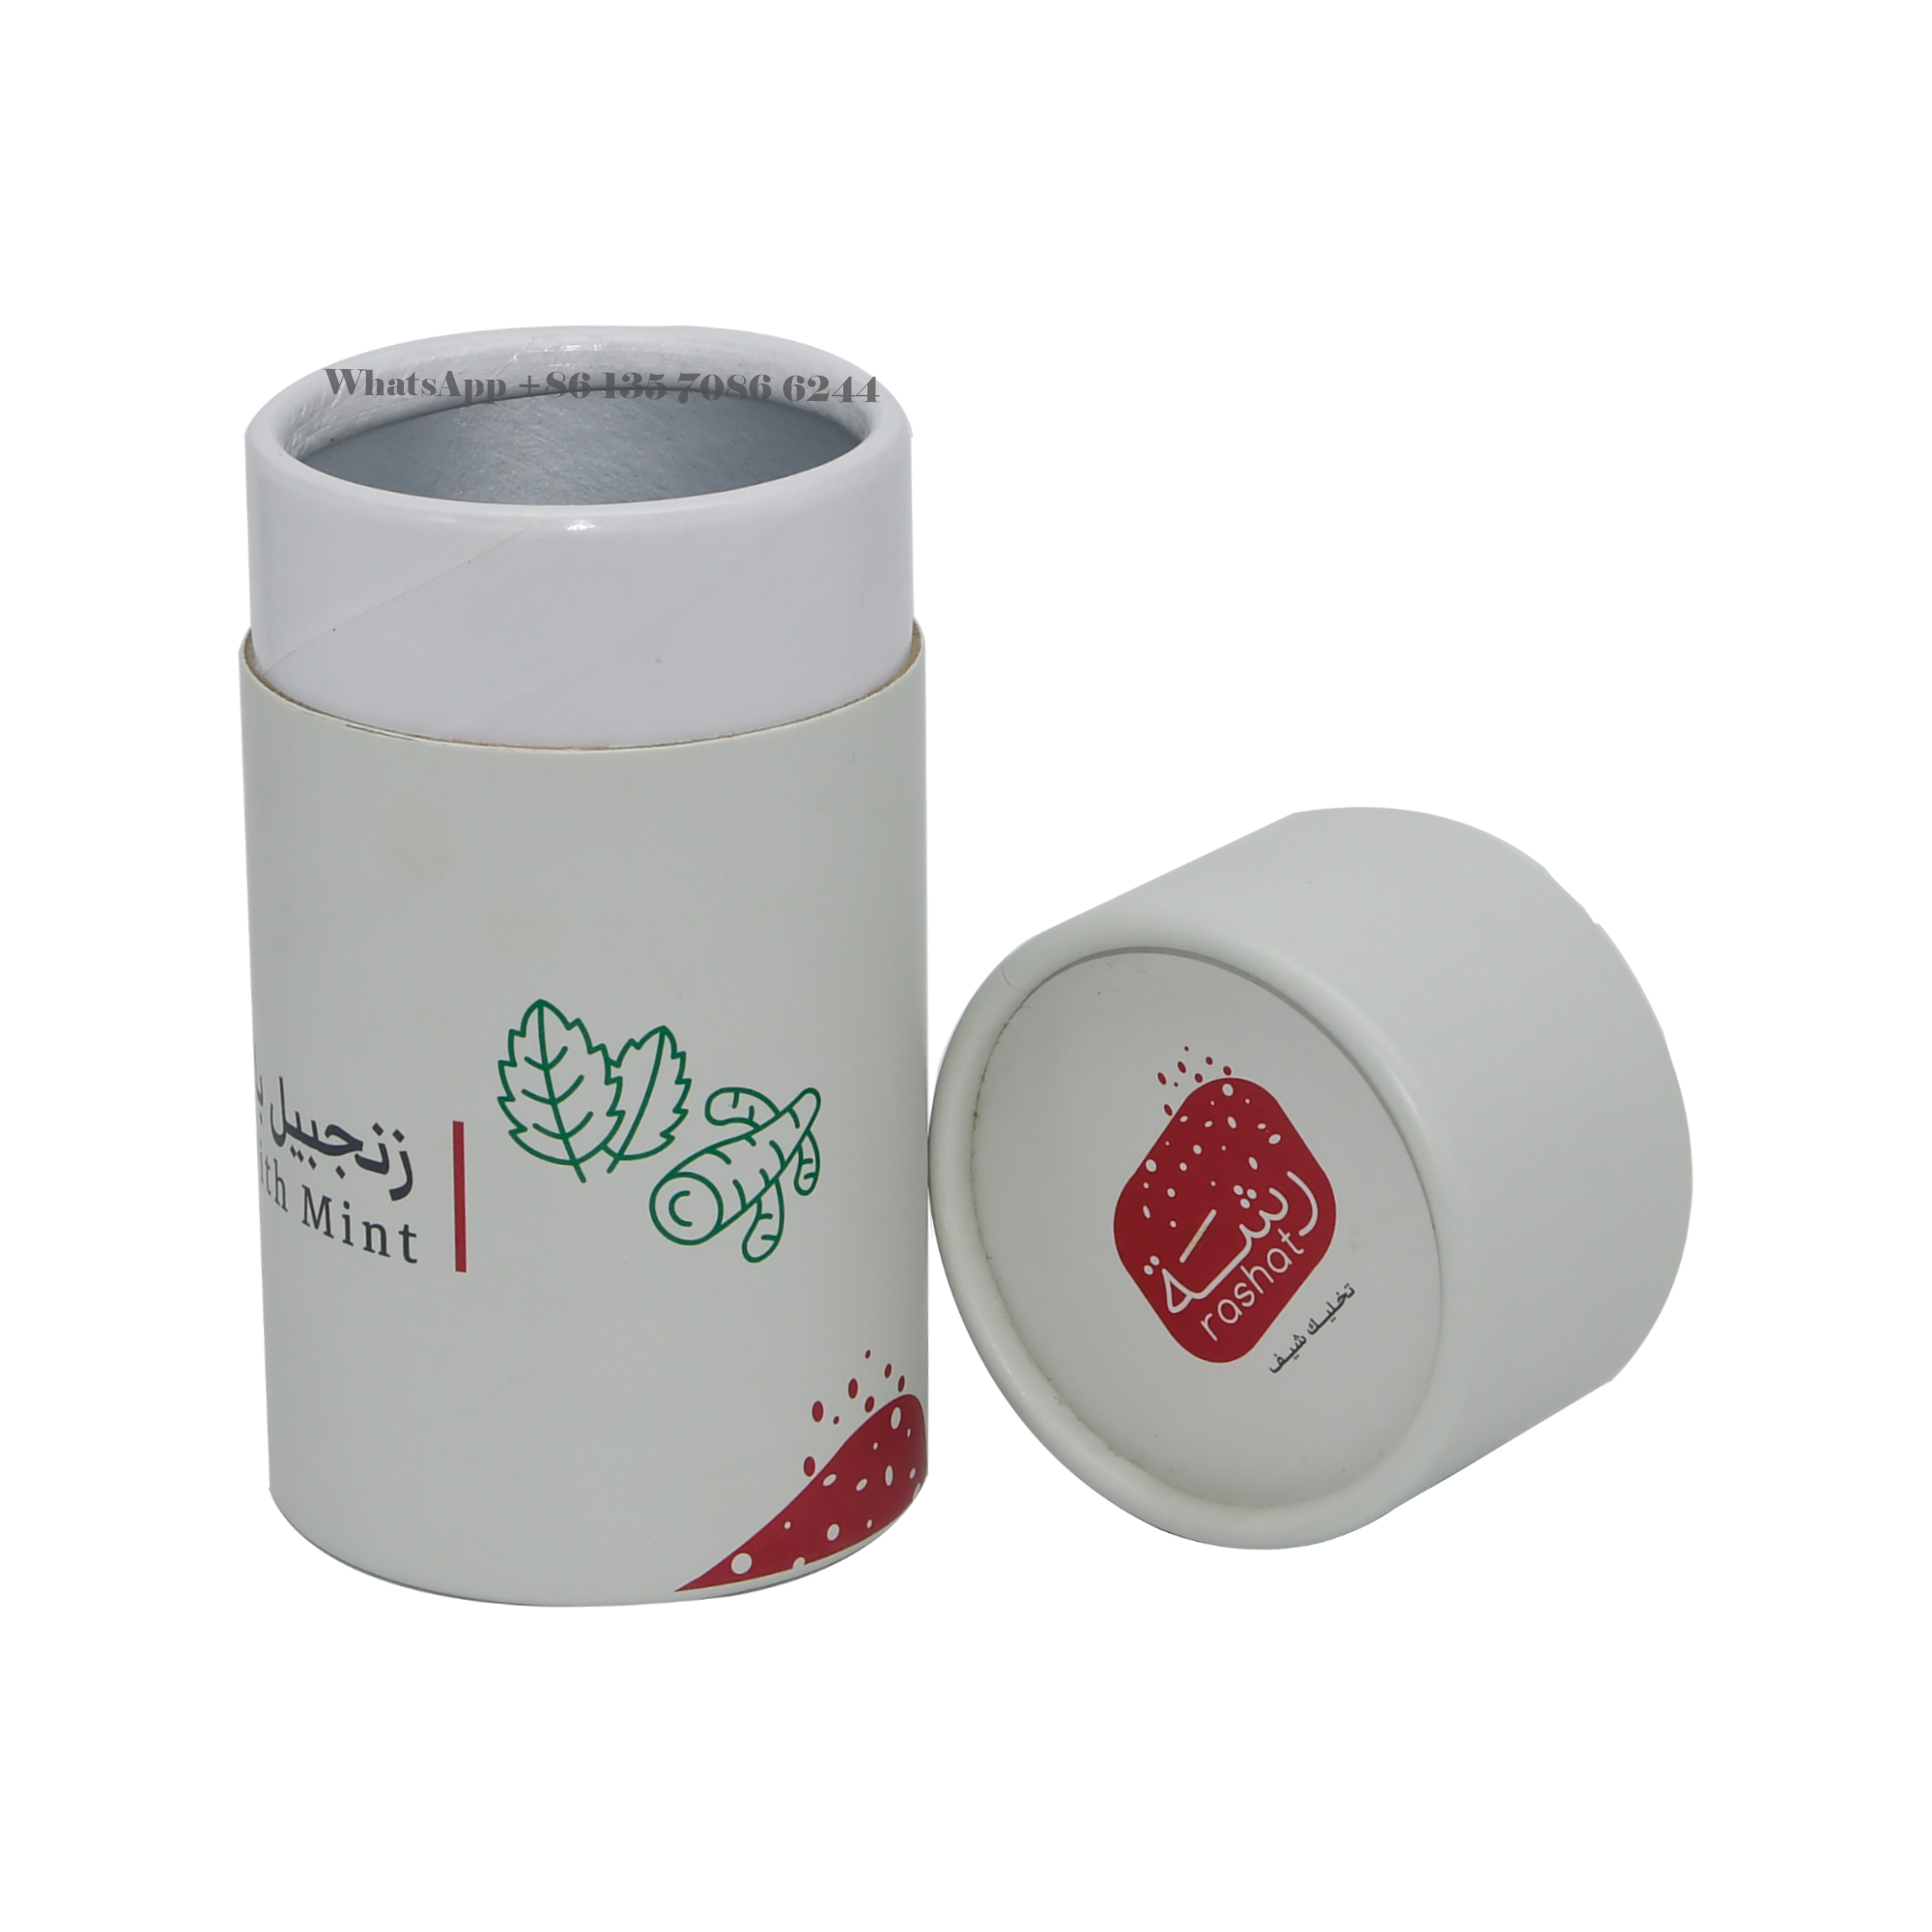  Caja de tubo de papel sellado sostenible con lámina de aluminio para envasado de té de jengibre  